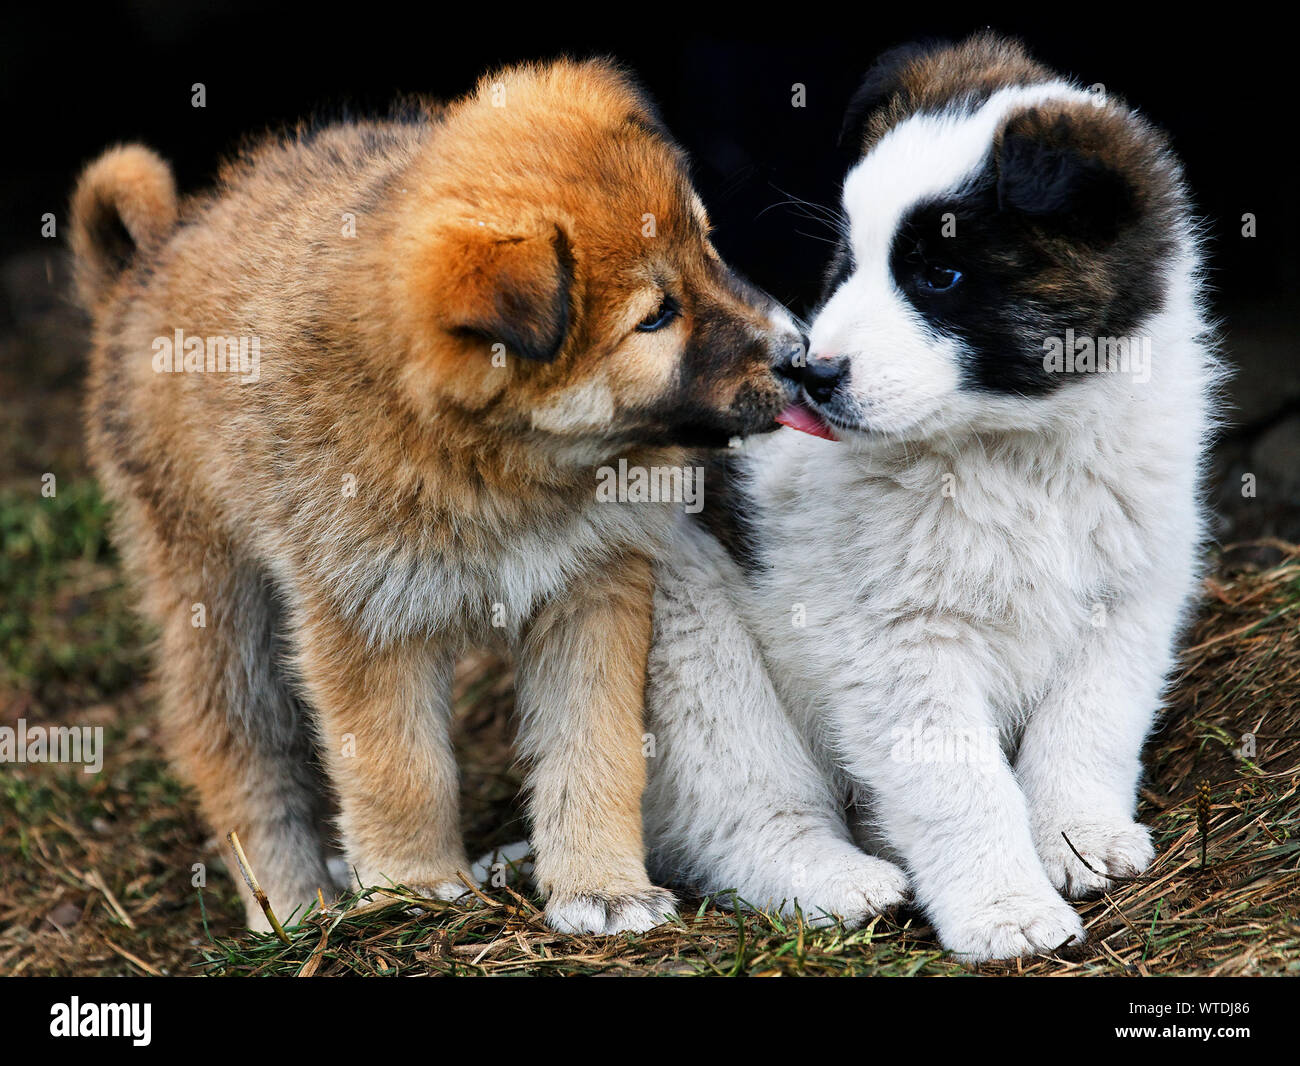 Hunde Küssen auf Feld Stockfotografie - Alamy